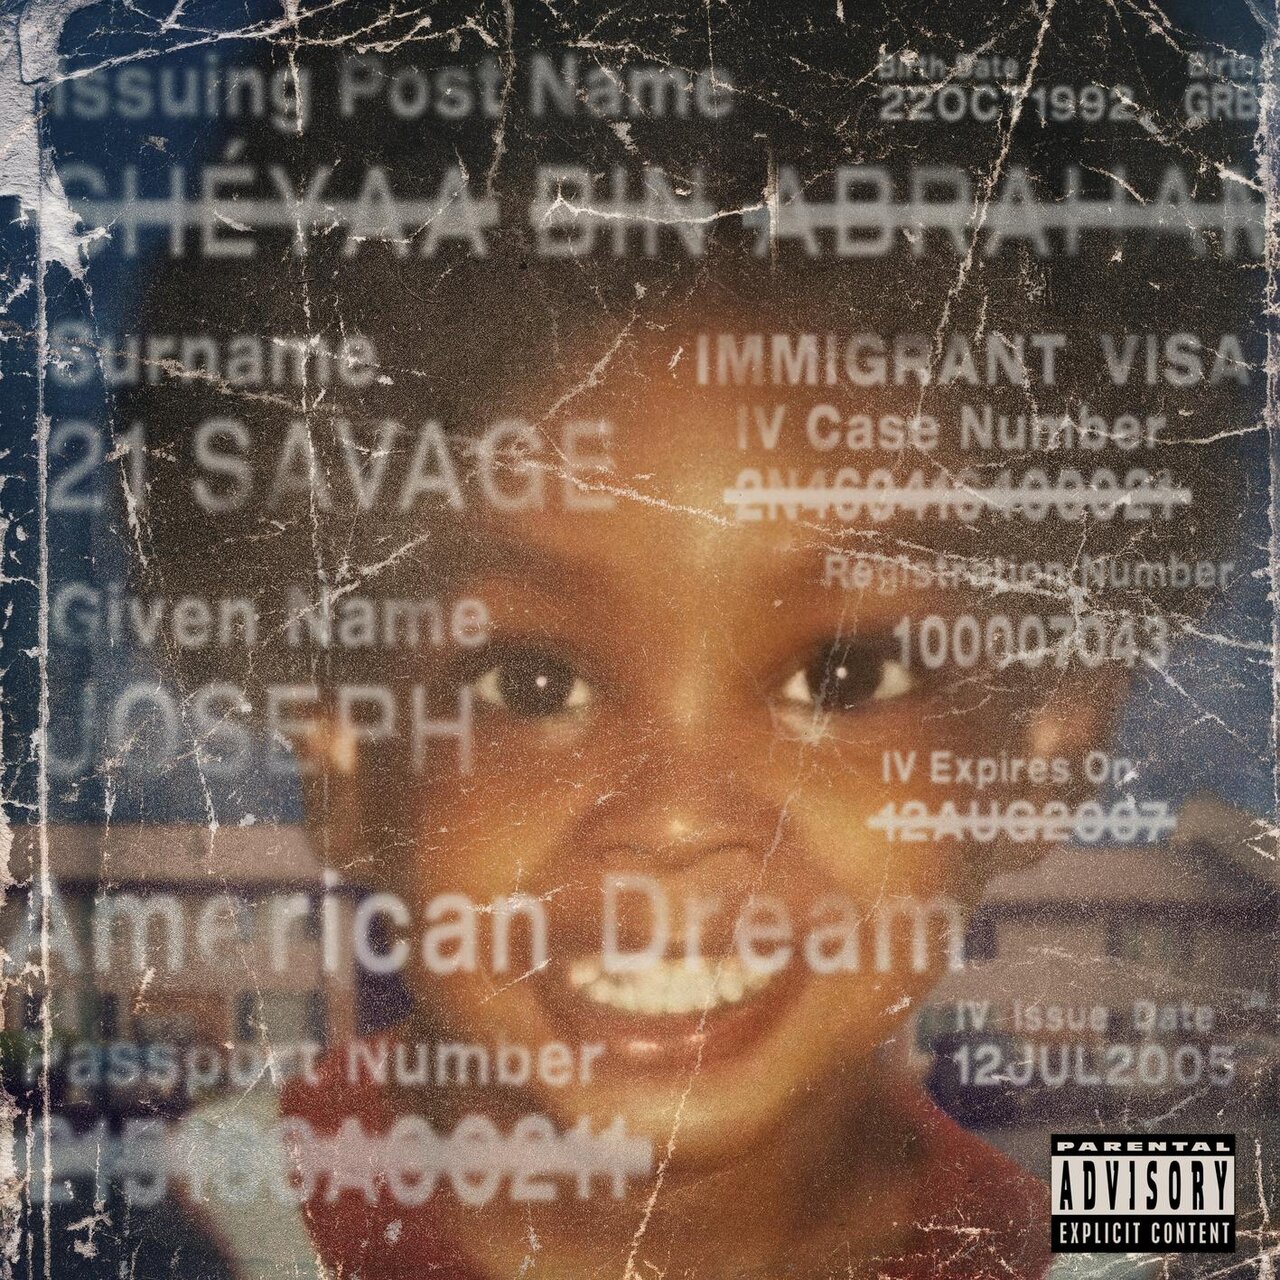 21 Savage - American Dream (Cover)